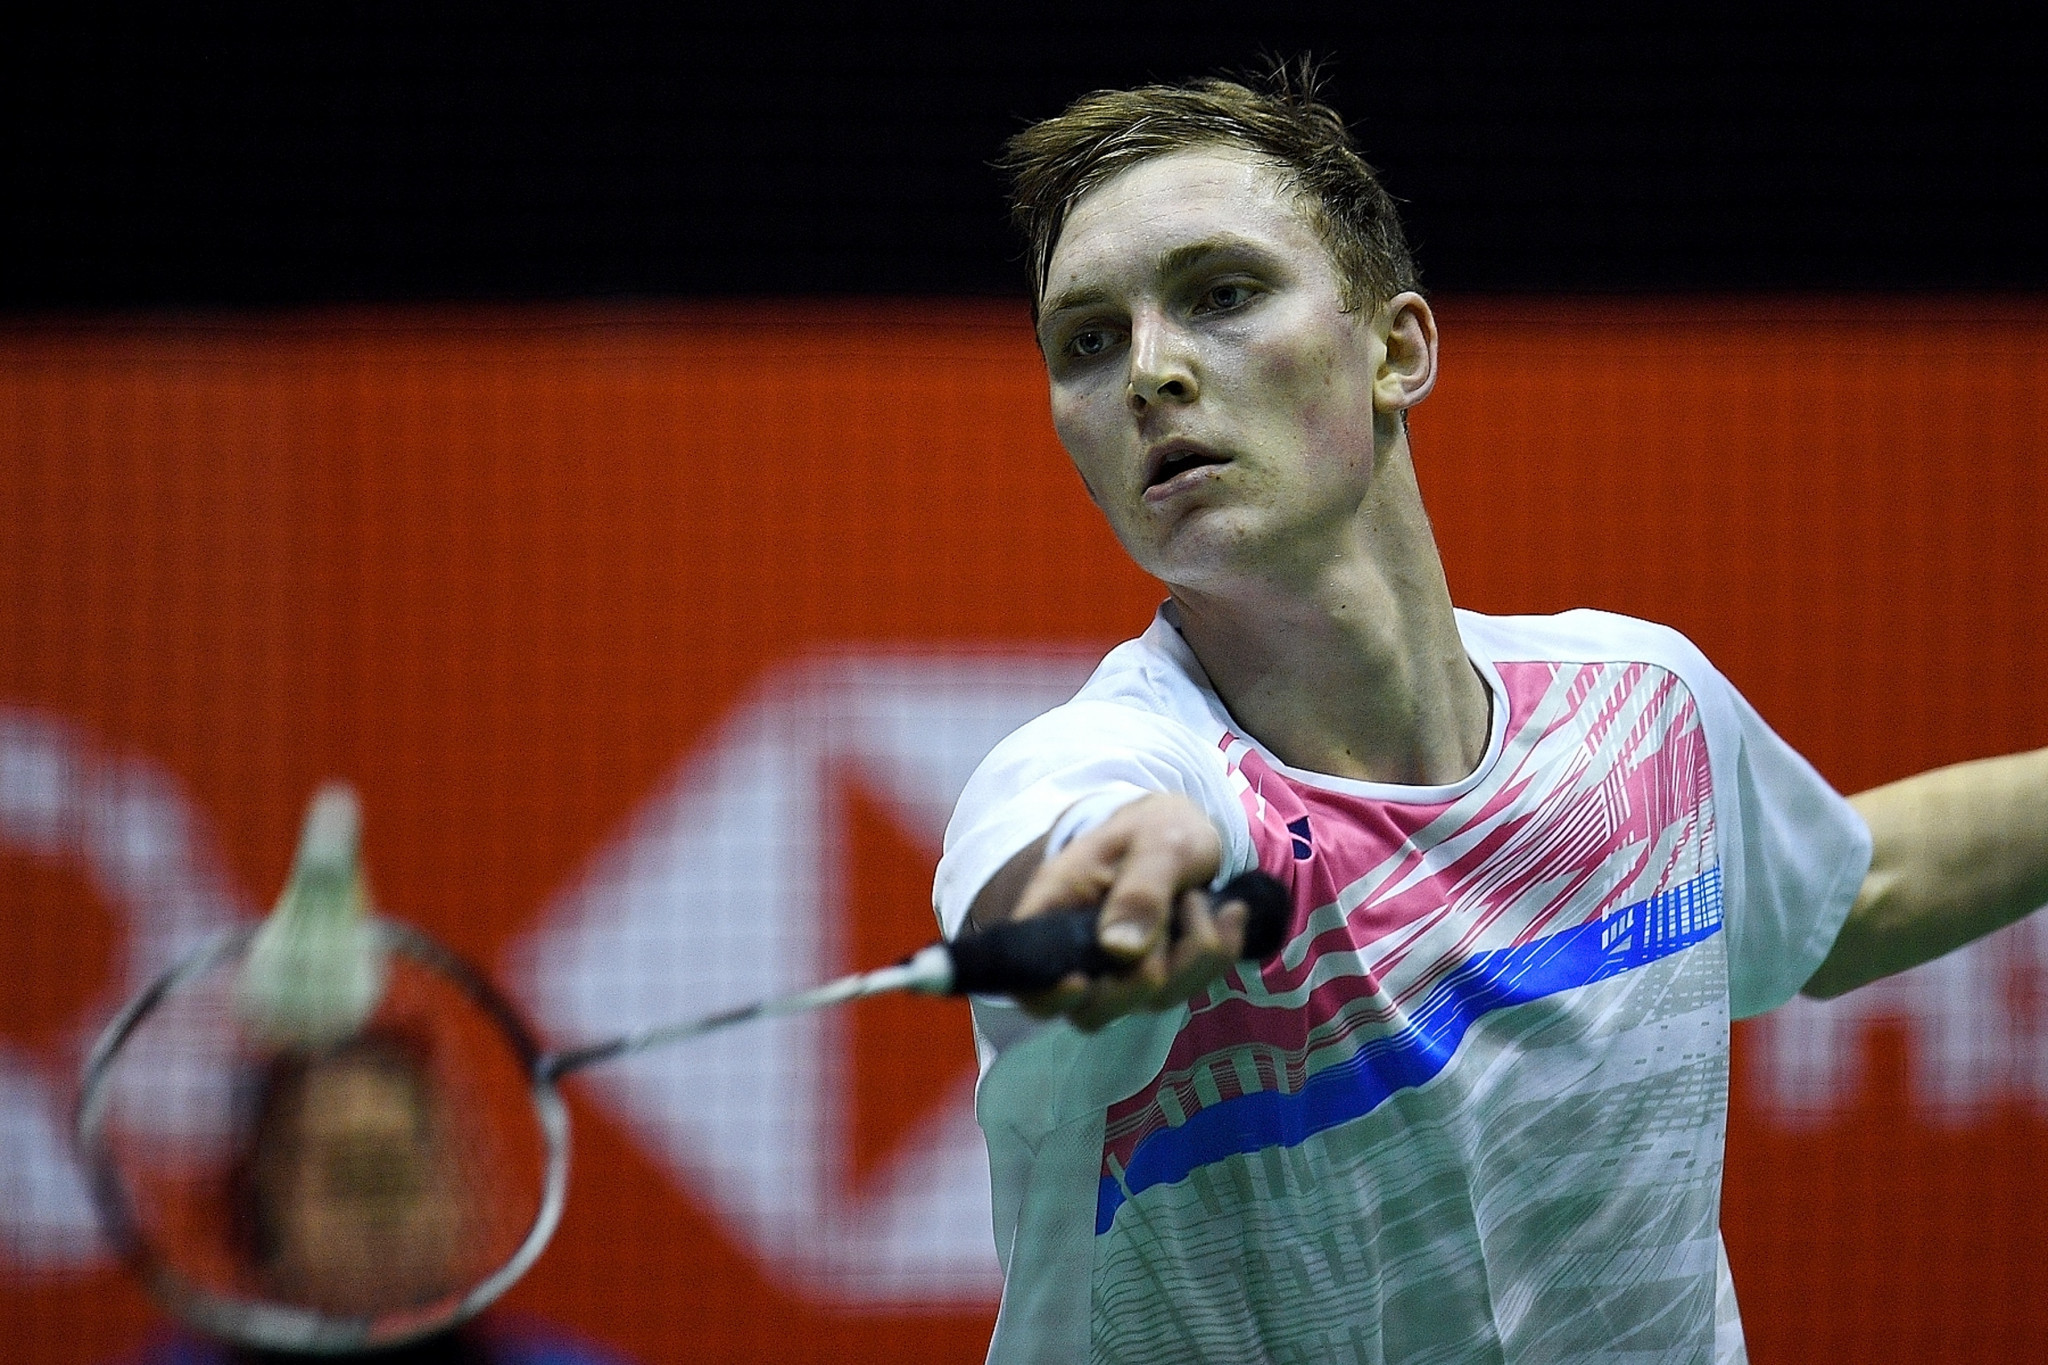 Denmark expected to dominate European Team Badminton Championships in Kazan